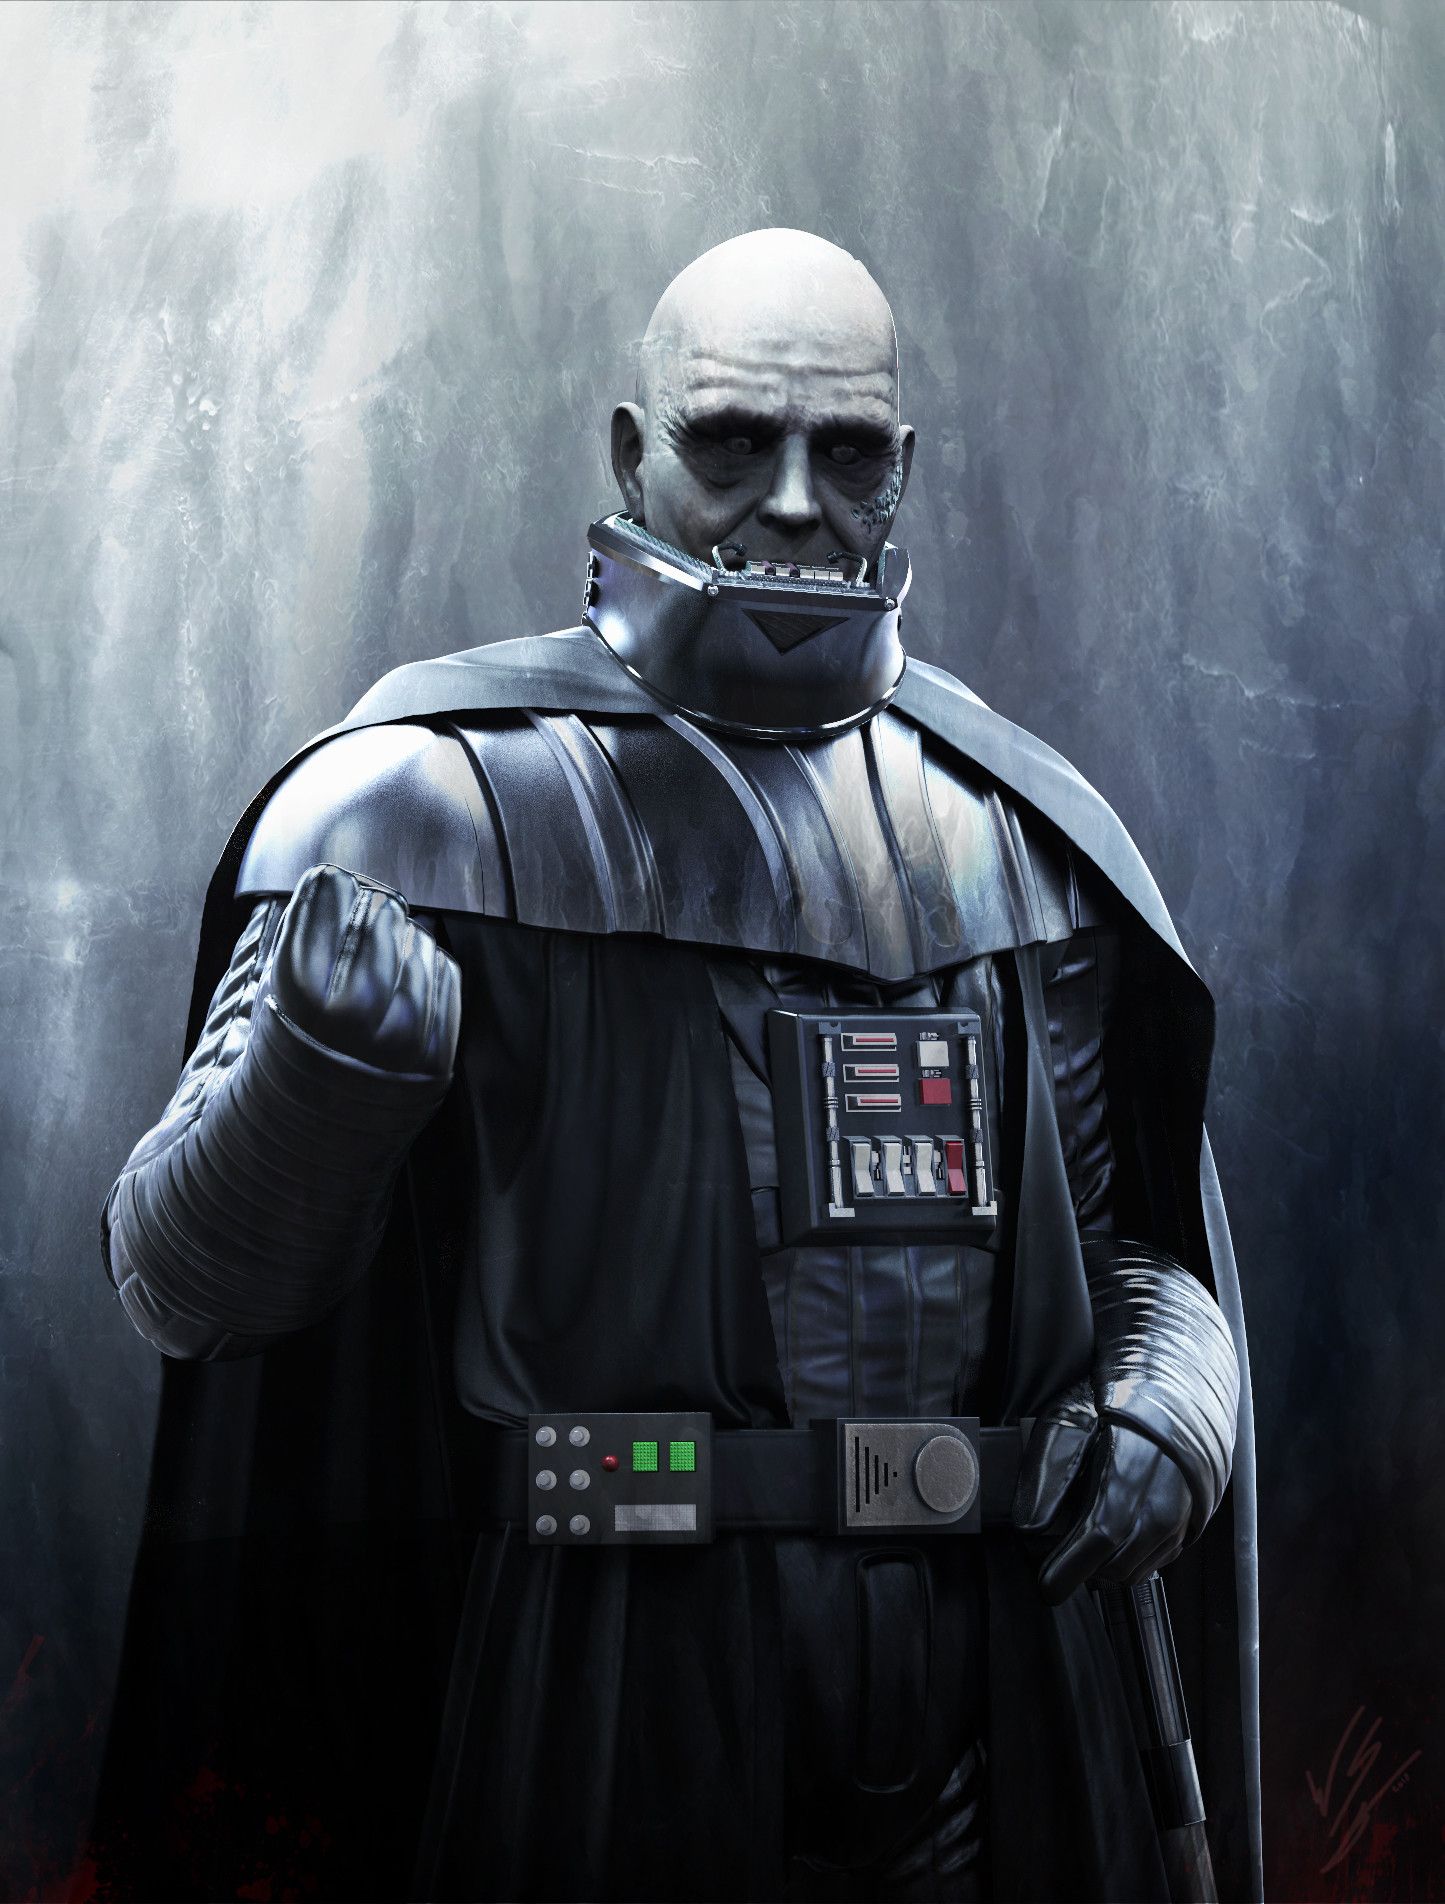 High Quality Darth Vader No Helmet Tell My Kids Pitbull Blank Meme Template